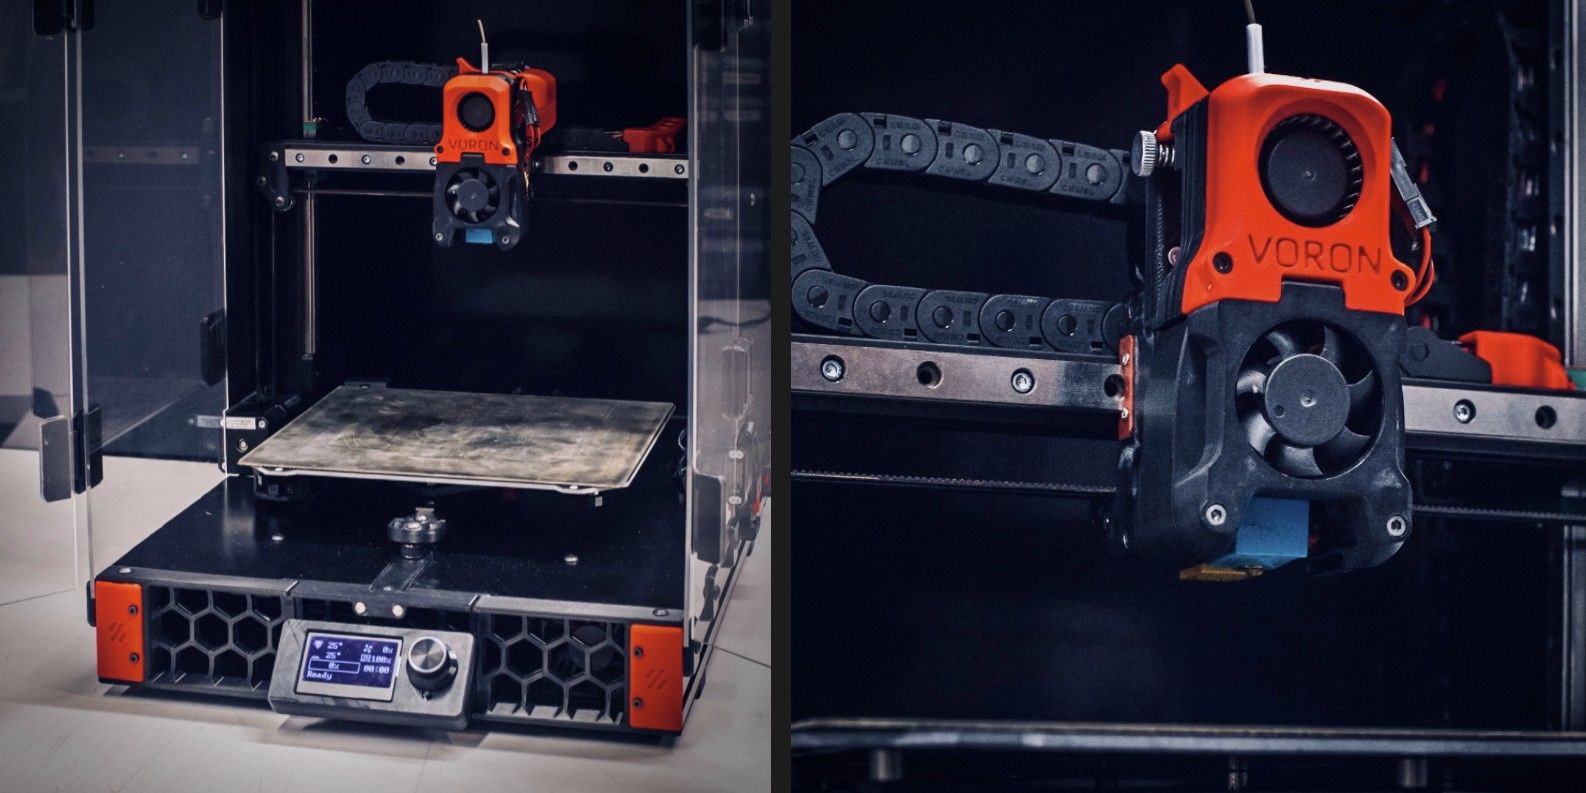 voron switchwire 3d printer - Una guida per principianti alle stampanti 3D Voron fai da te: qualità di produzione per le masse